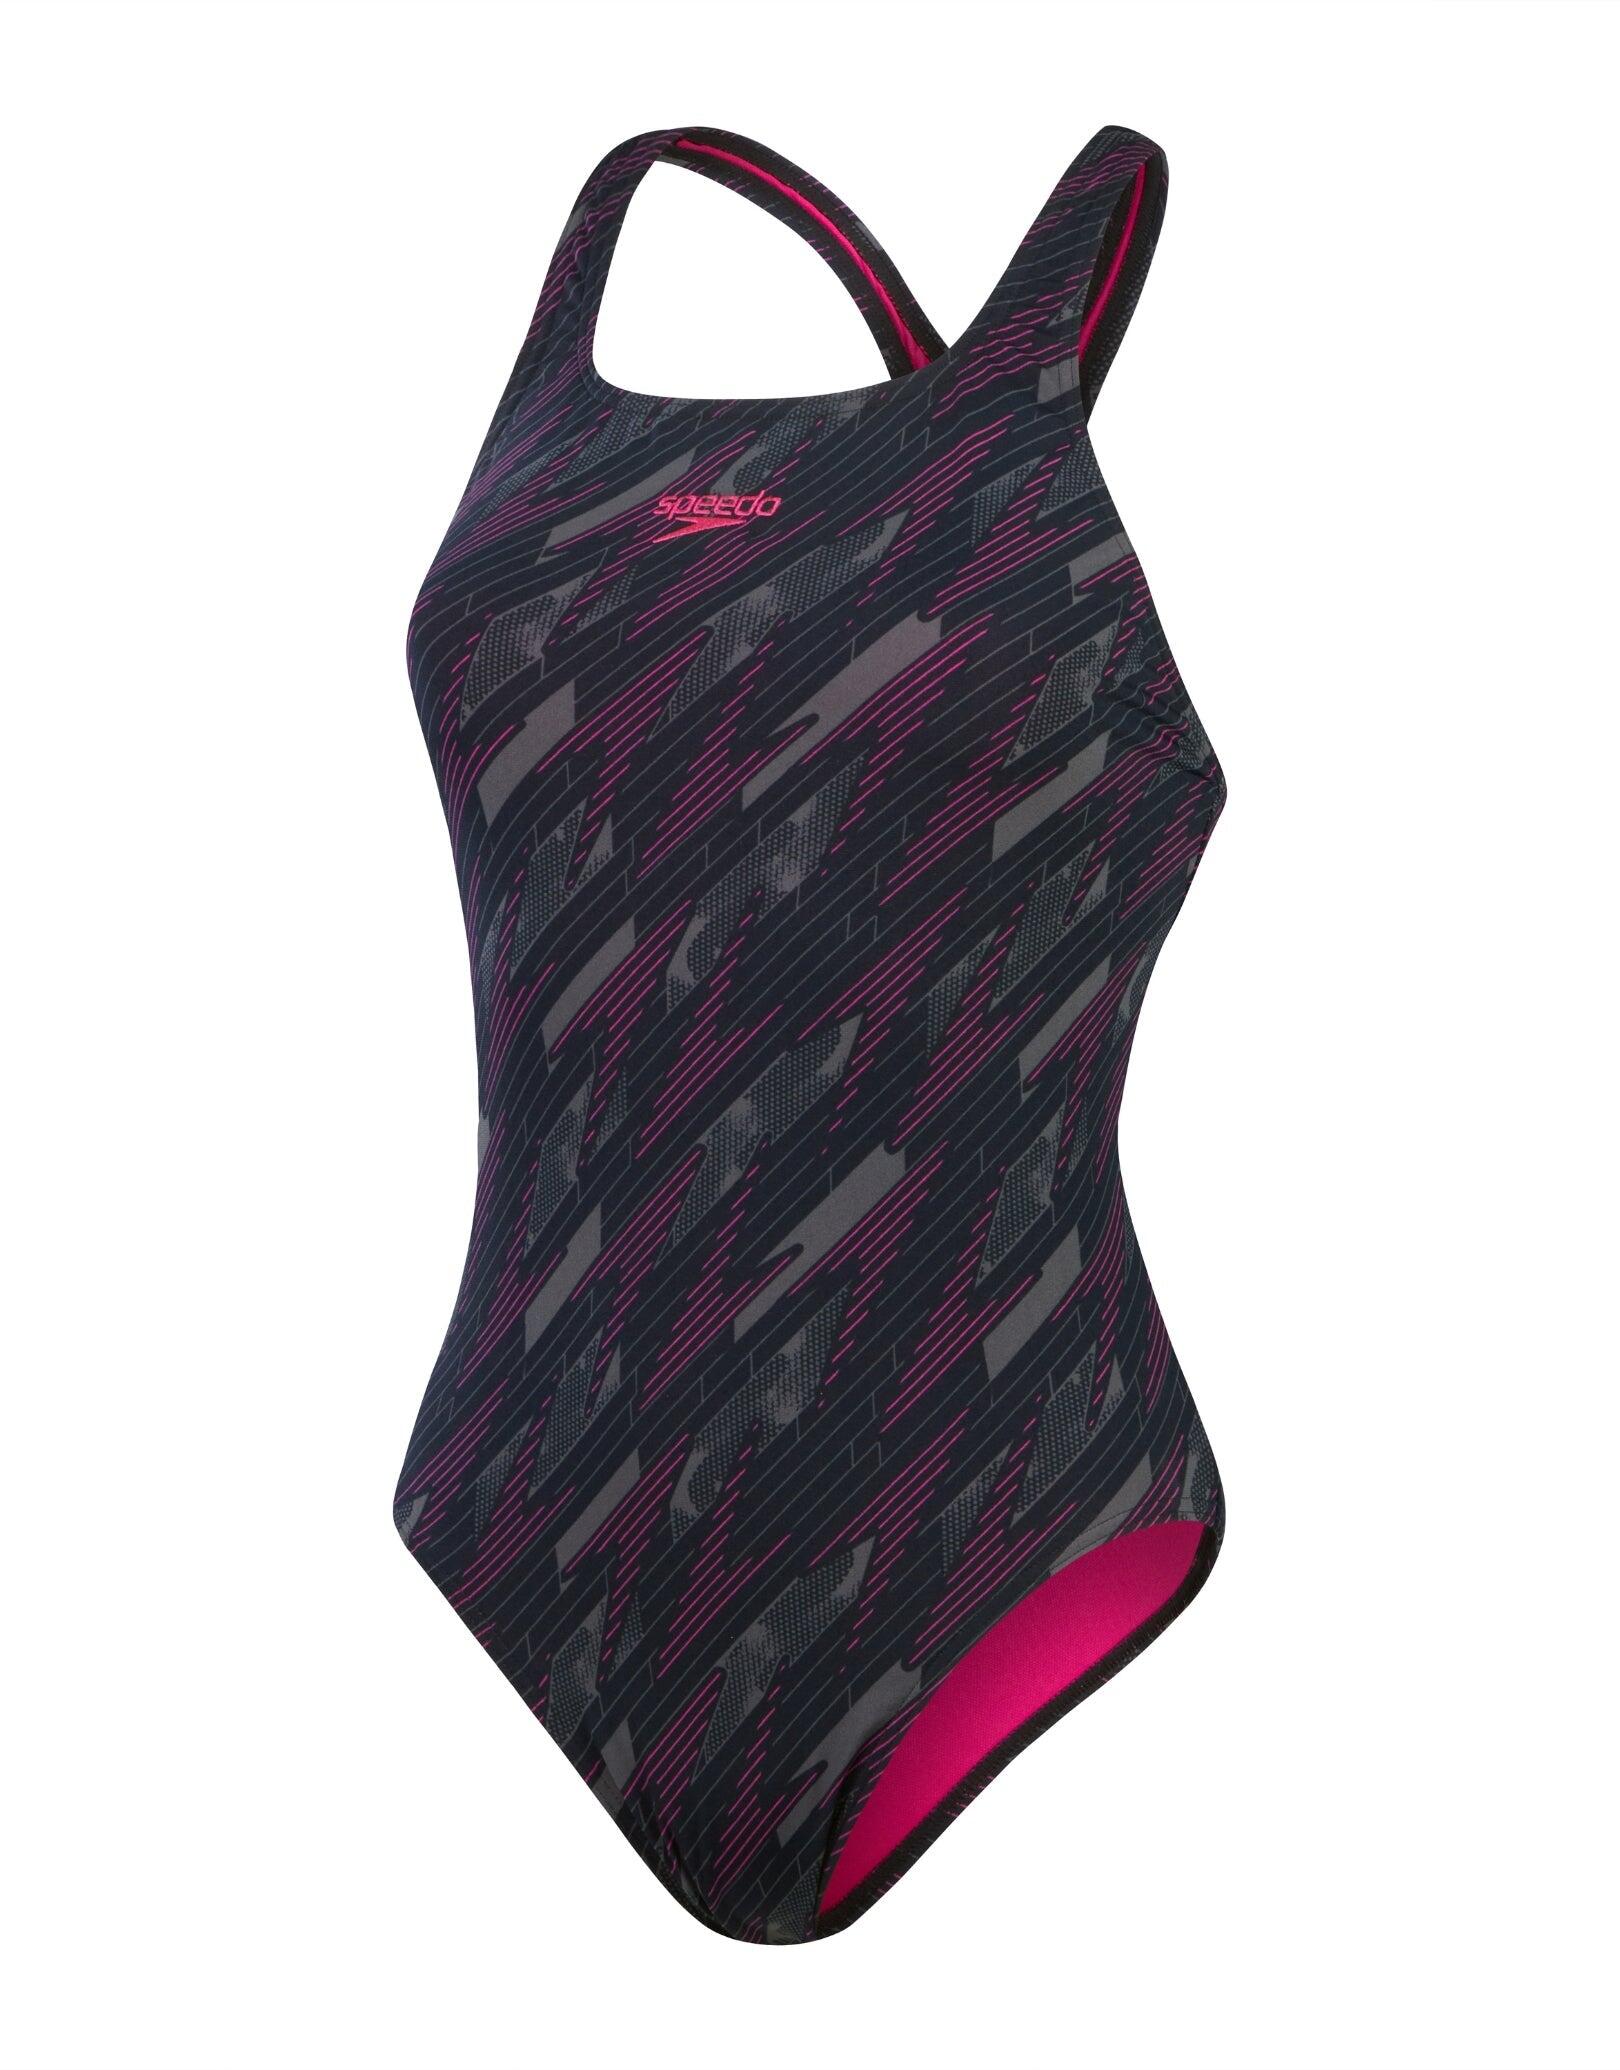 SPEEDO Speedo Hyperboom Allover Medalist Swimsuit - Black/Pink